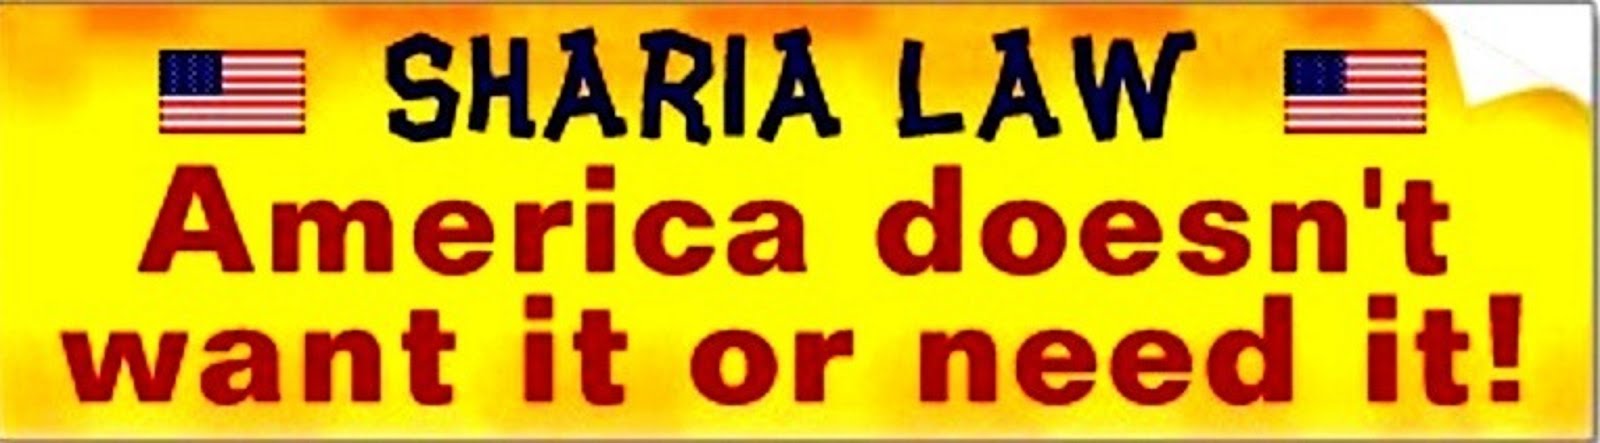 NO SHARIA LAW IN AMERICA